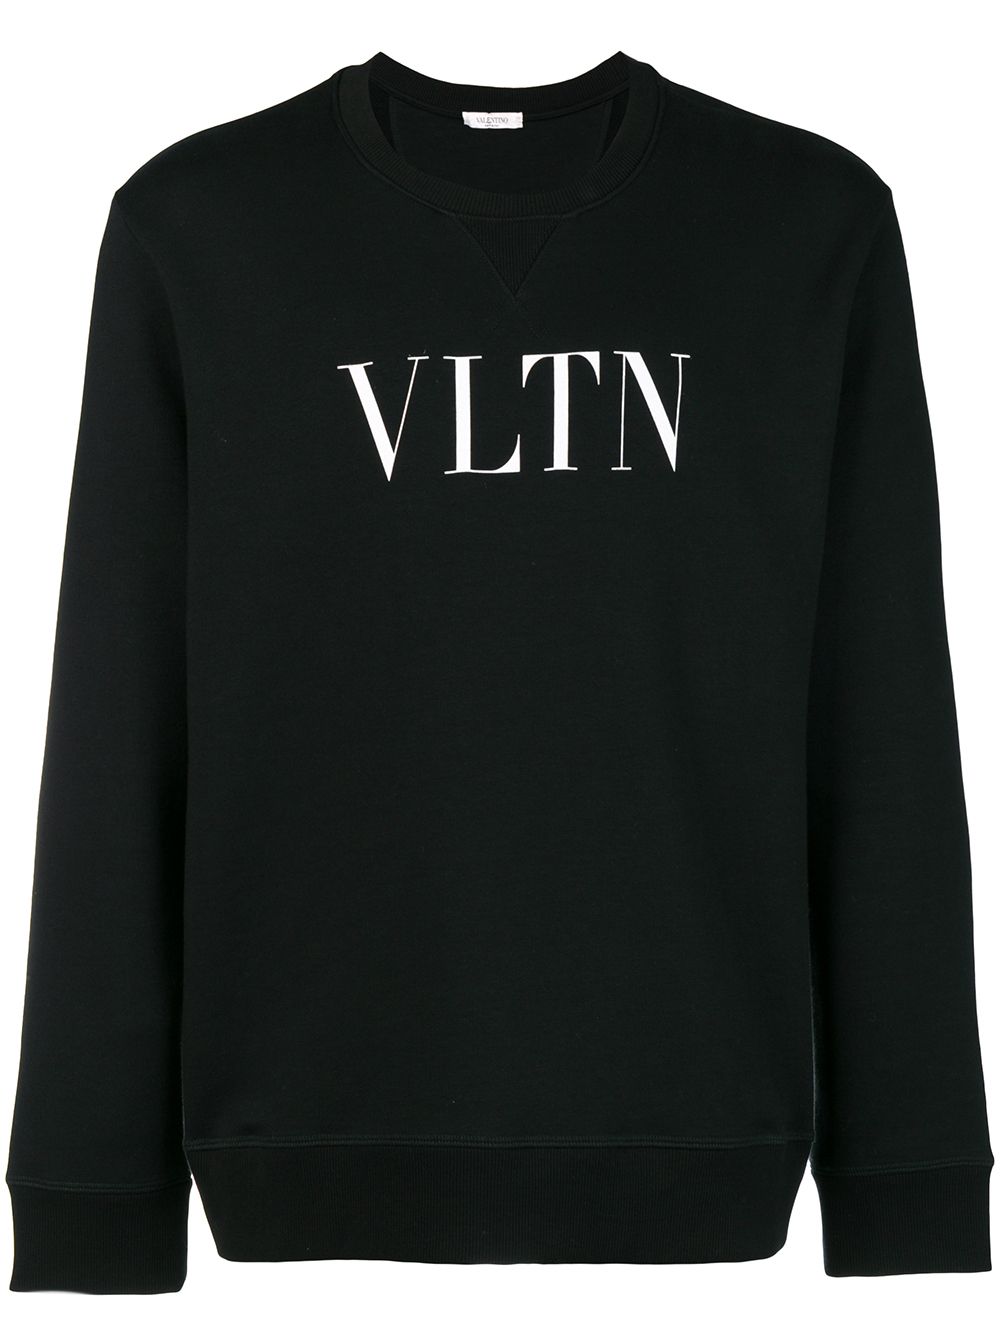 VLTN print sweatshirt